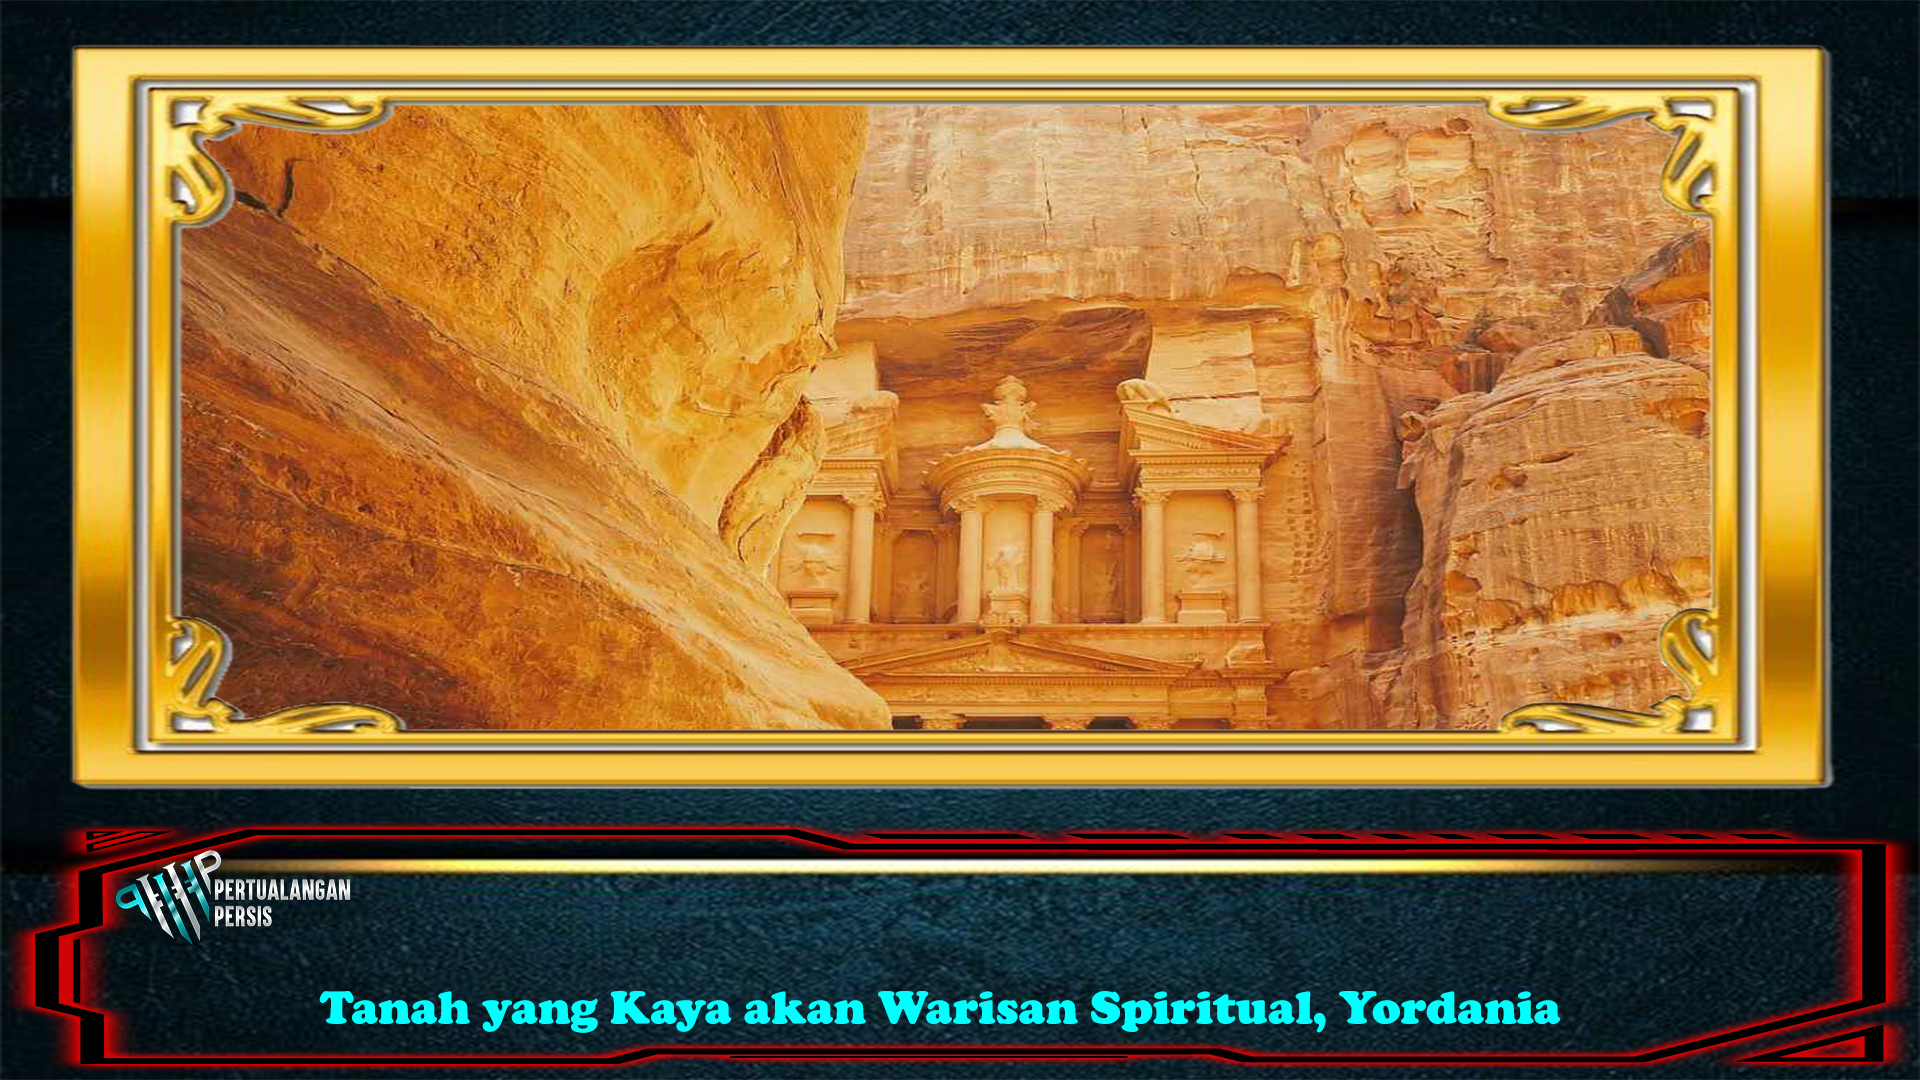 Tanah yang Kaya akan Warisan Spiritual, Yordania